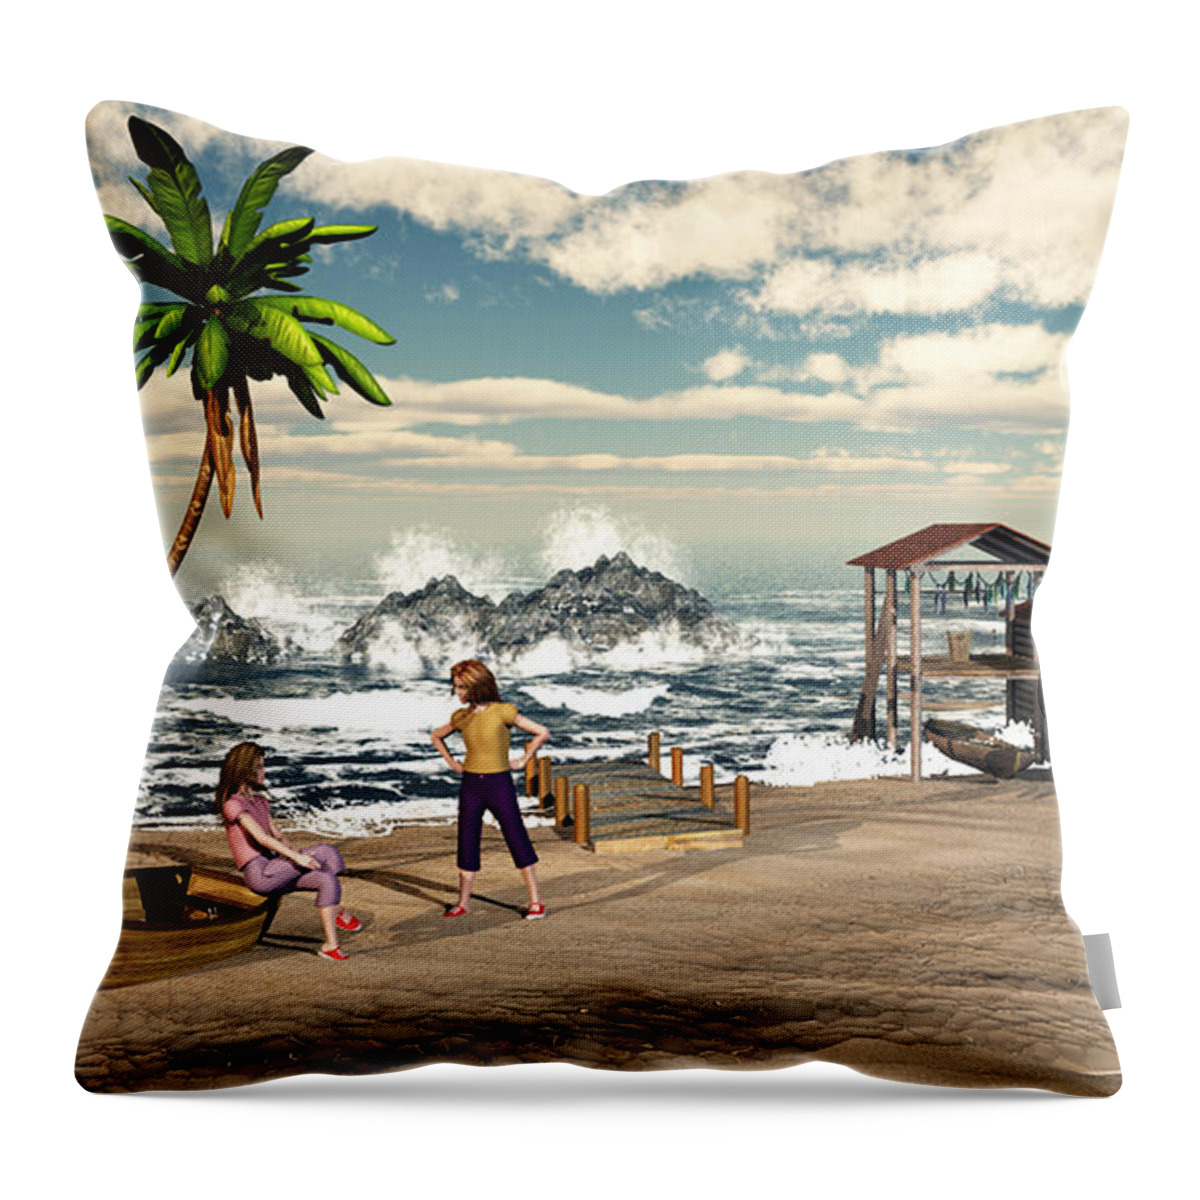 Charming Beach Scene Throw Pillow featuring the digital art Charming Beach Scene by John Junek